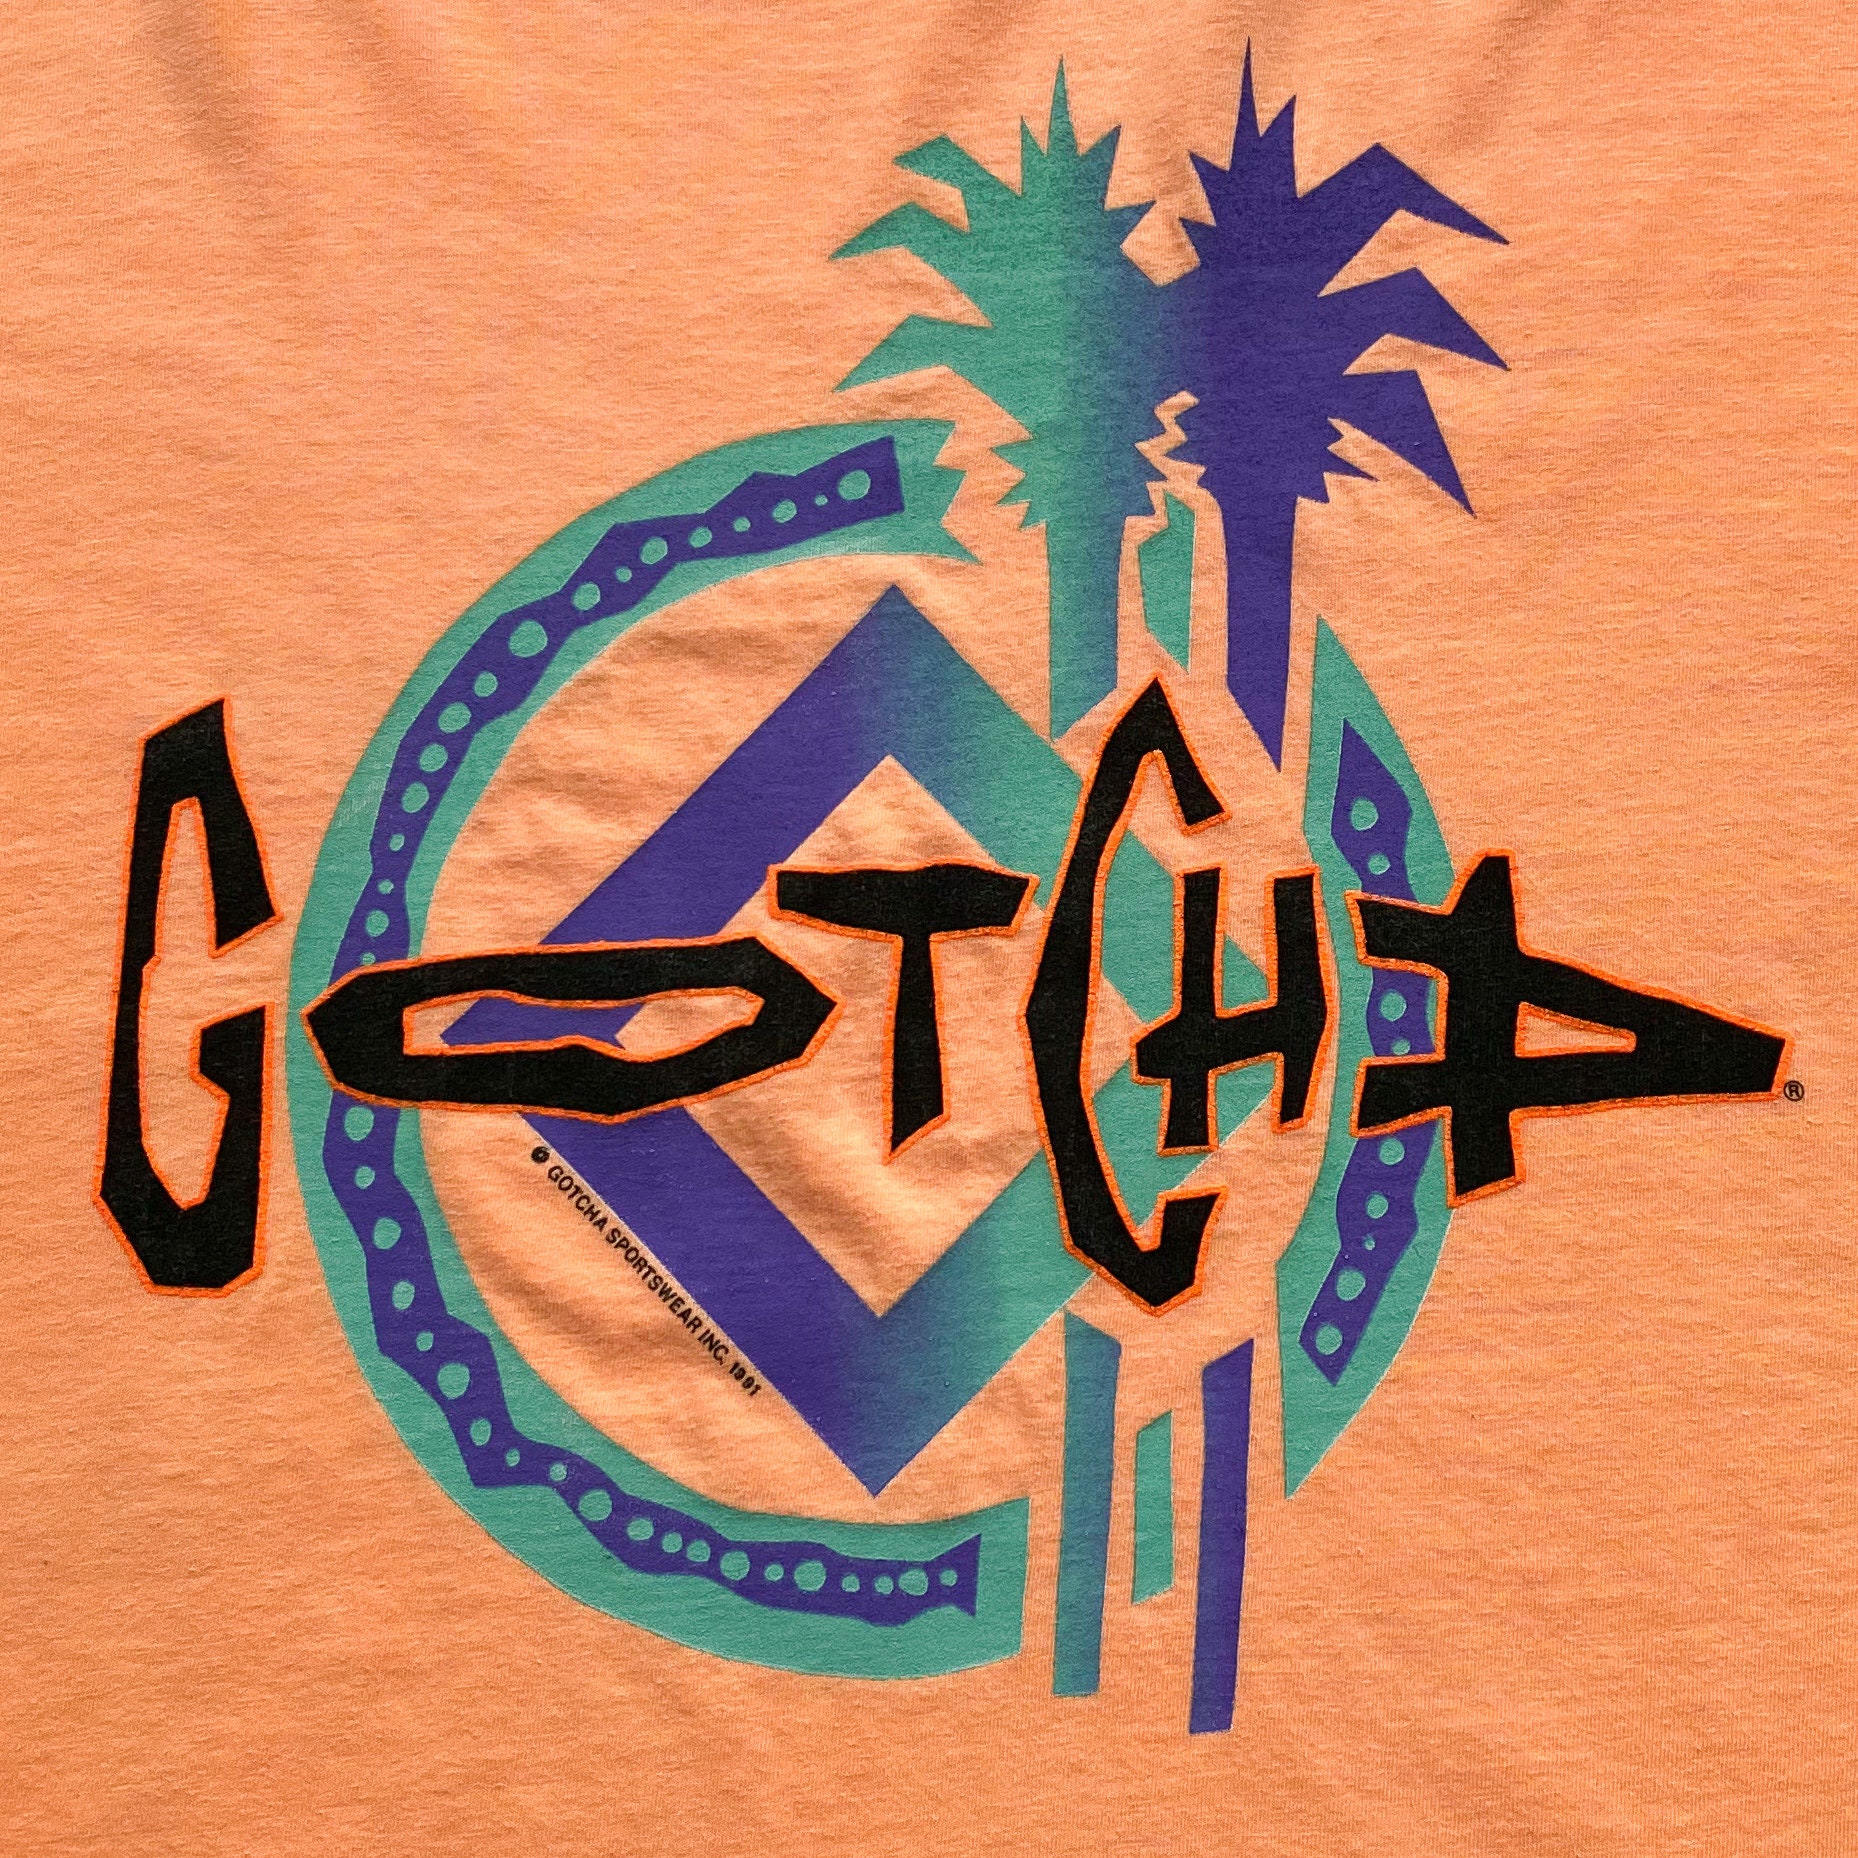 90s Gotcha Surf T-Shirt. Vintage 1991 Gotcha Graphic Logo Peach